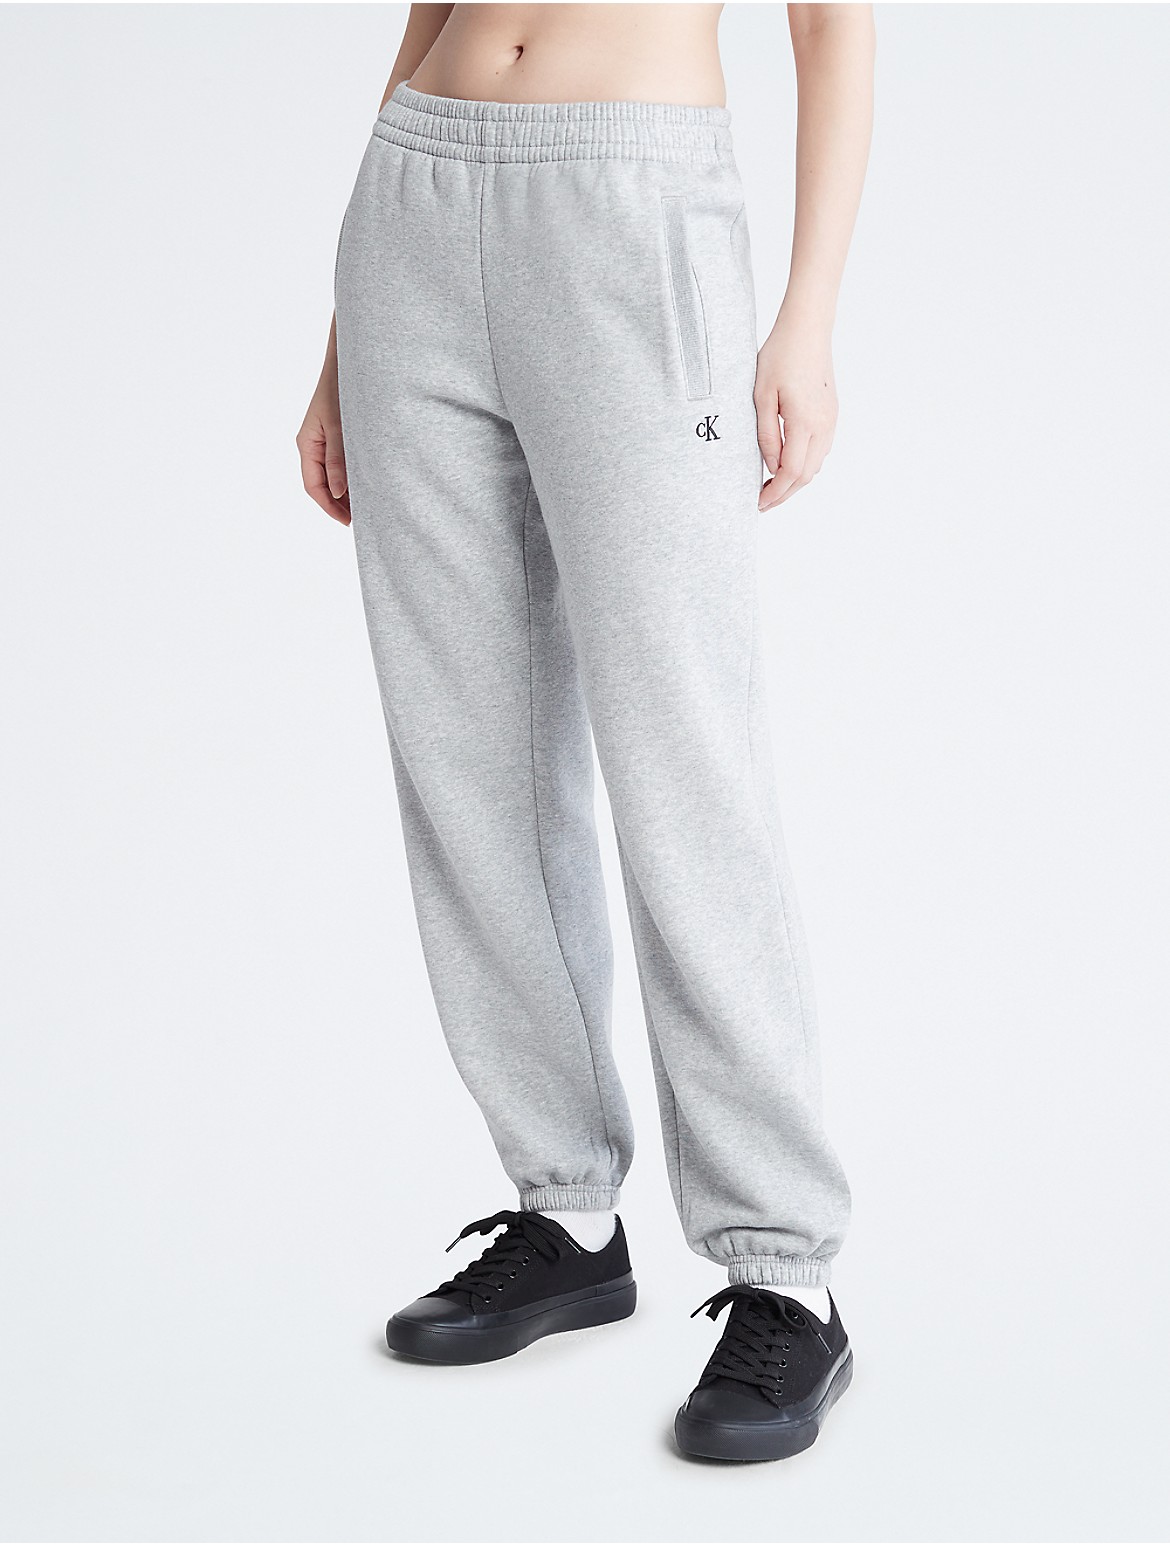 Calvin Klein Women's Archive Logo Fleece Joggers - Grey - L